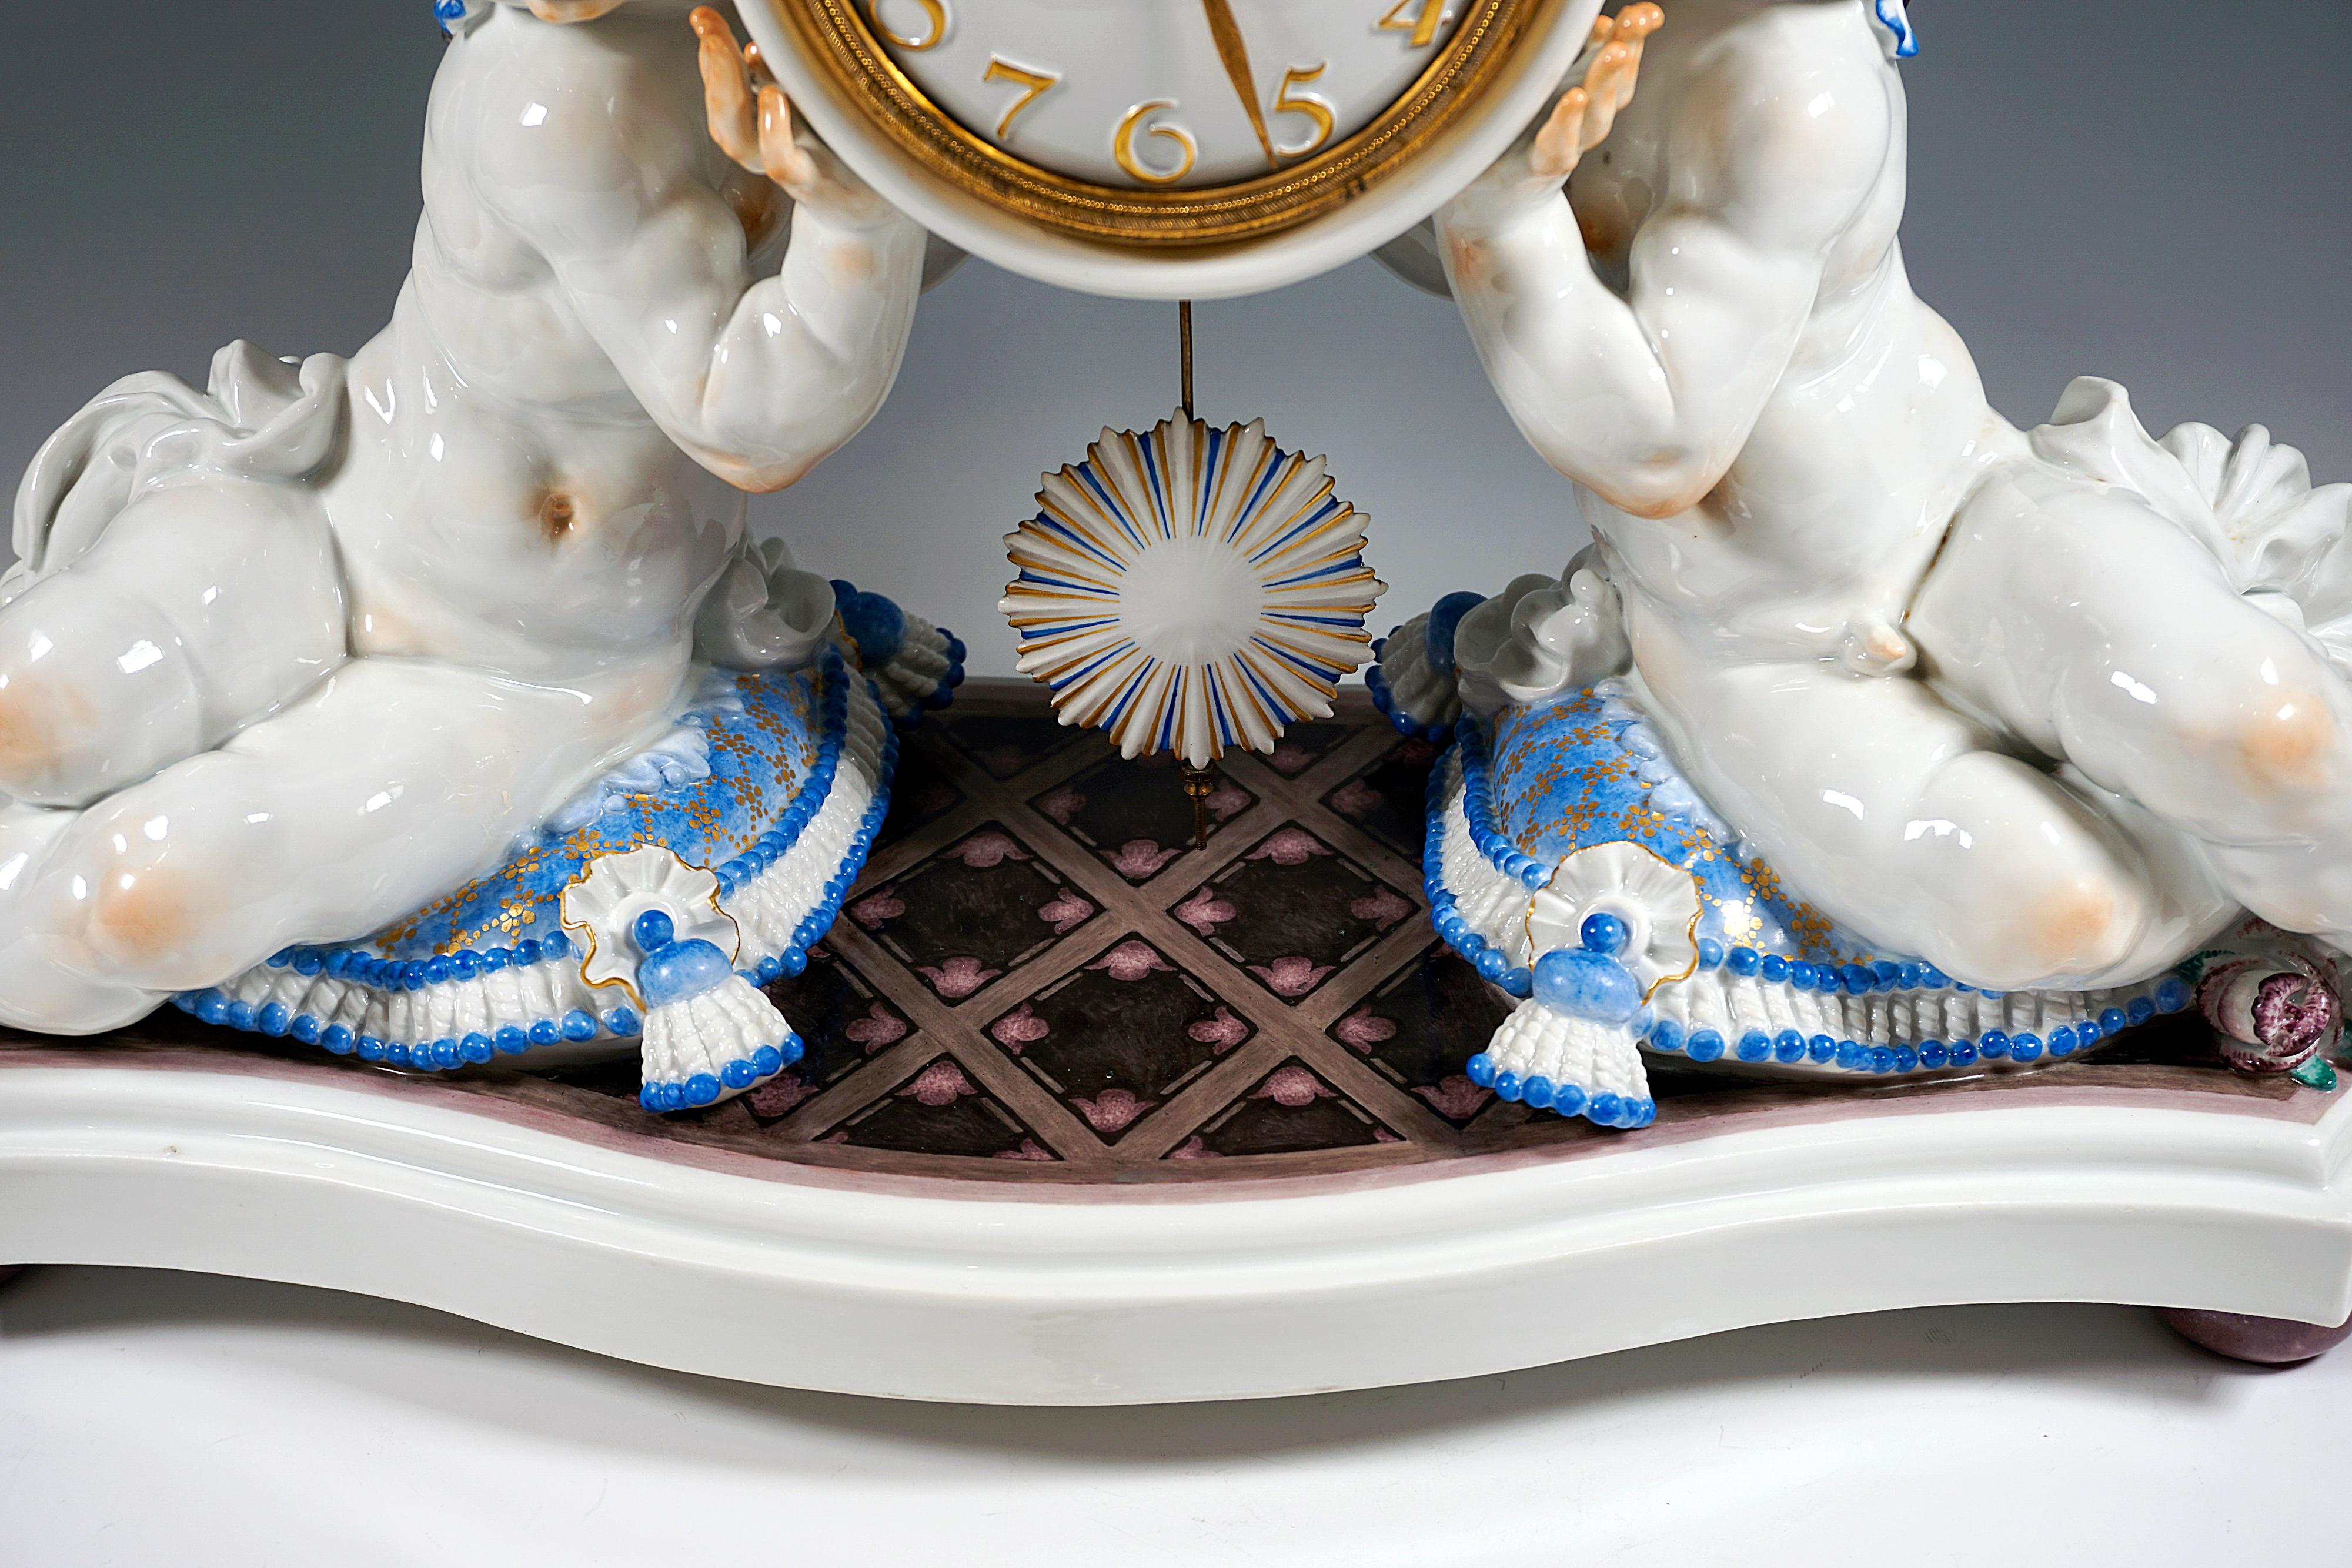 20th Century Meissen Art Déco Mantle Clock with Two Putti by Paul Scheurich 1934-1947